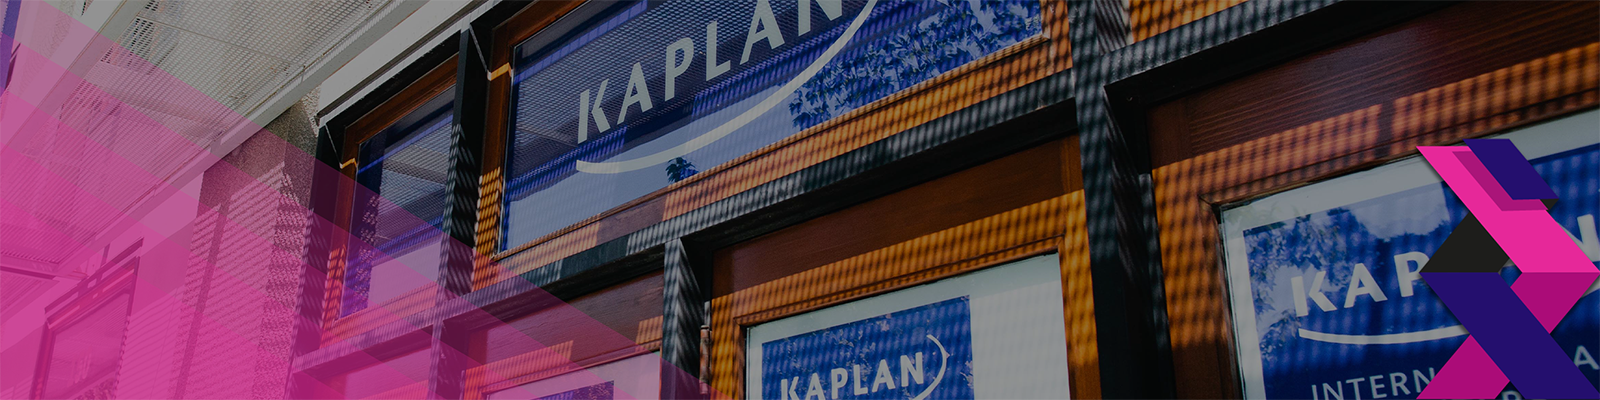 Kaplan International Languages - San Francisco Berkeley görseli